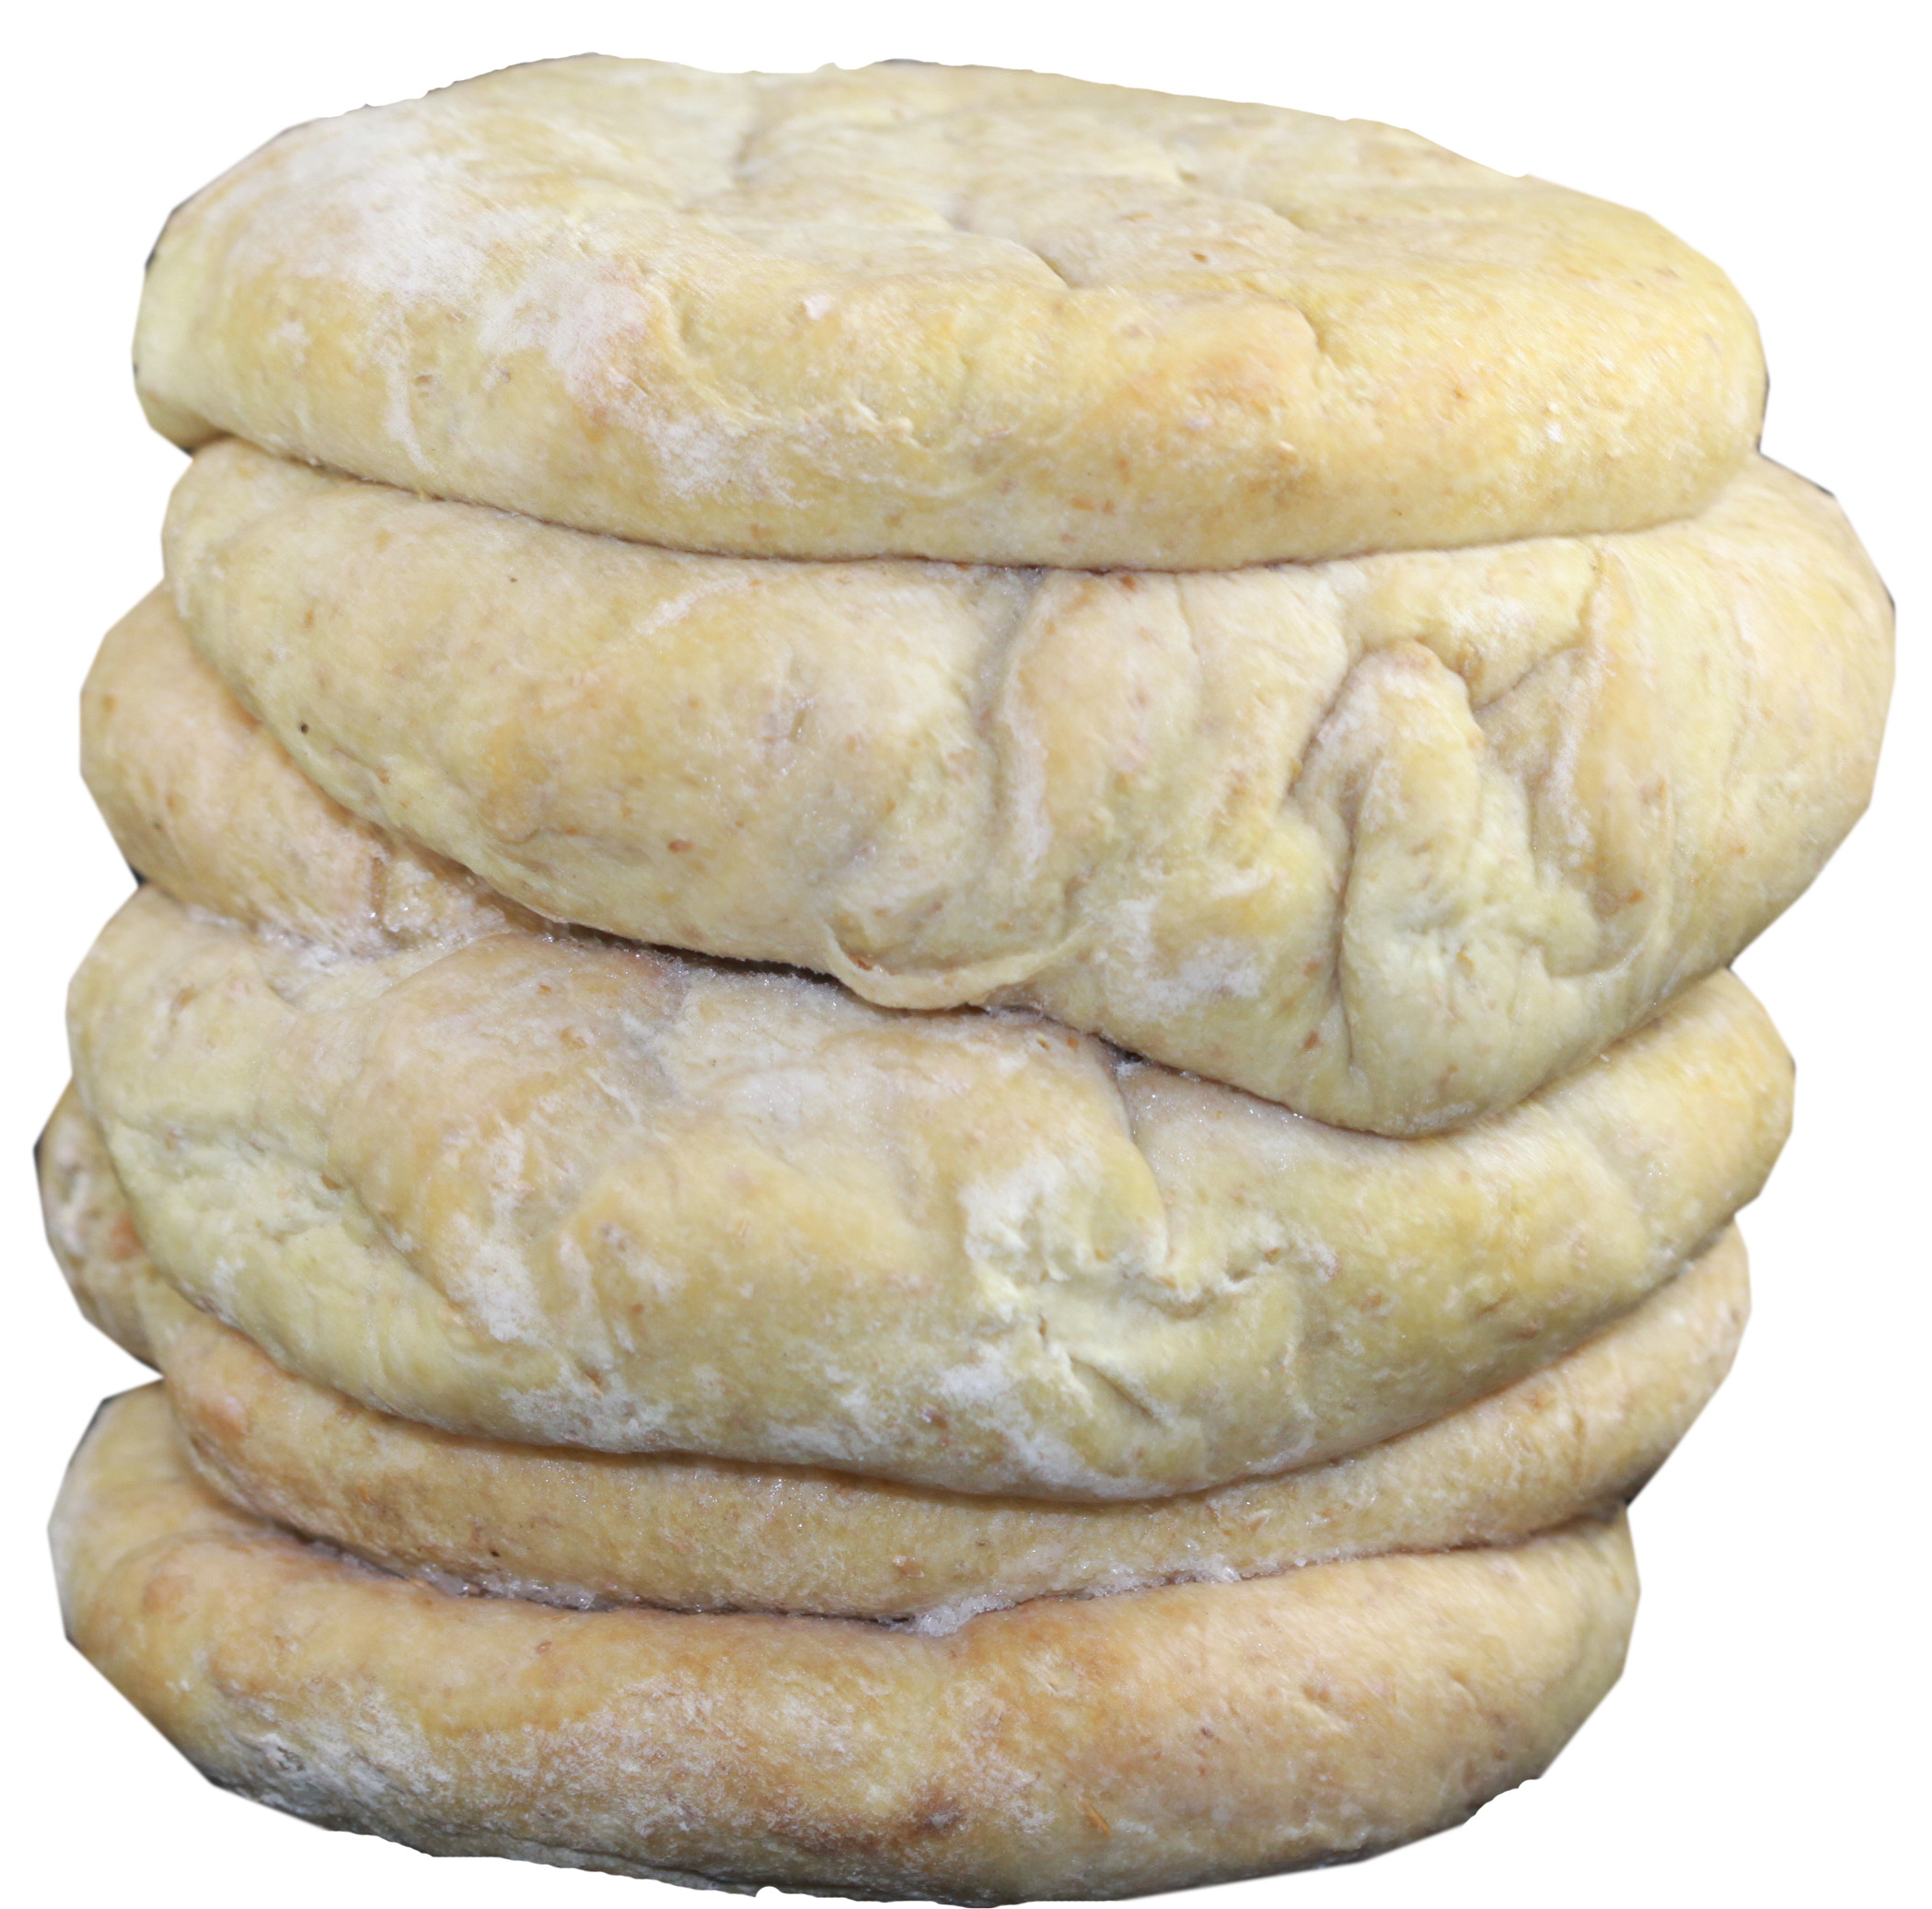 flat bread carbs